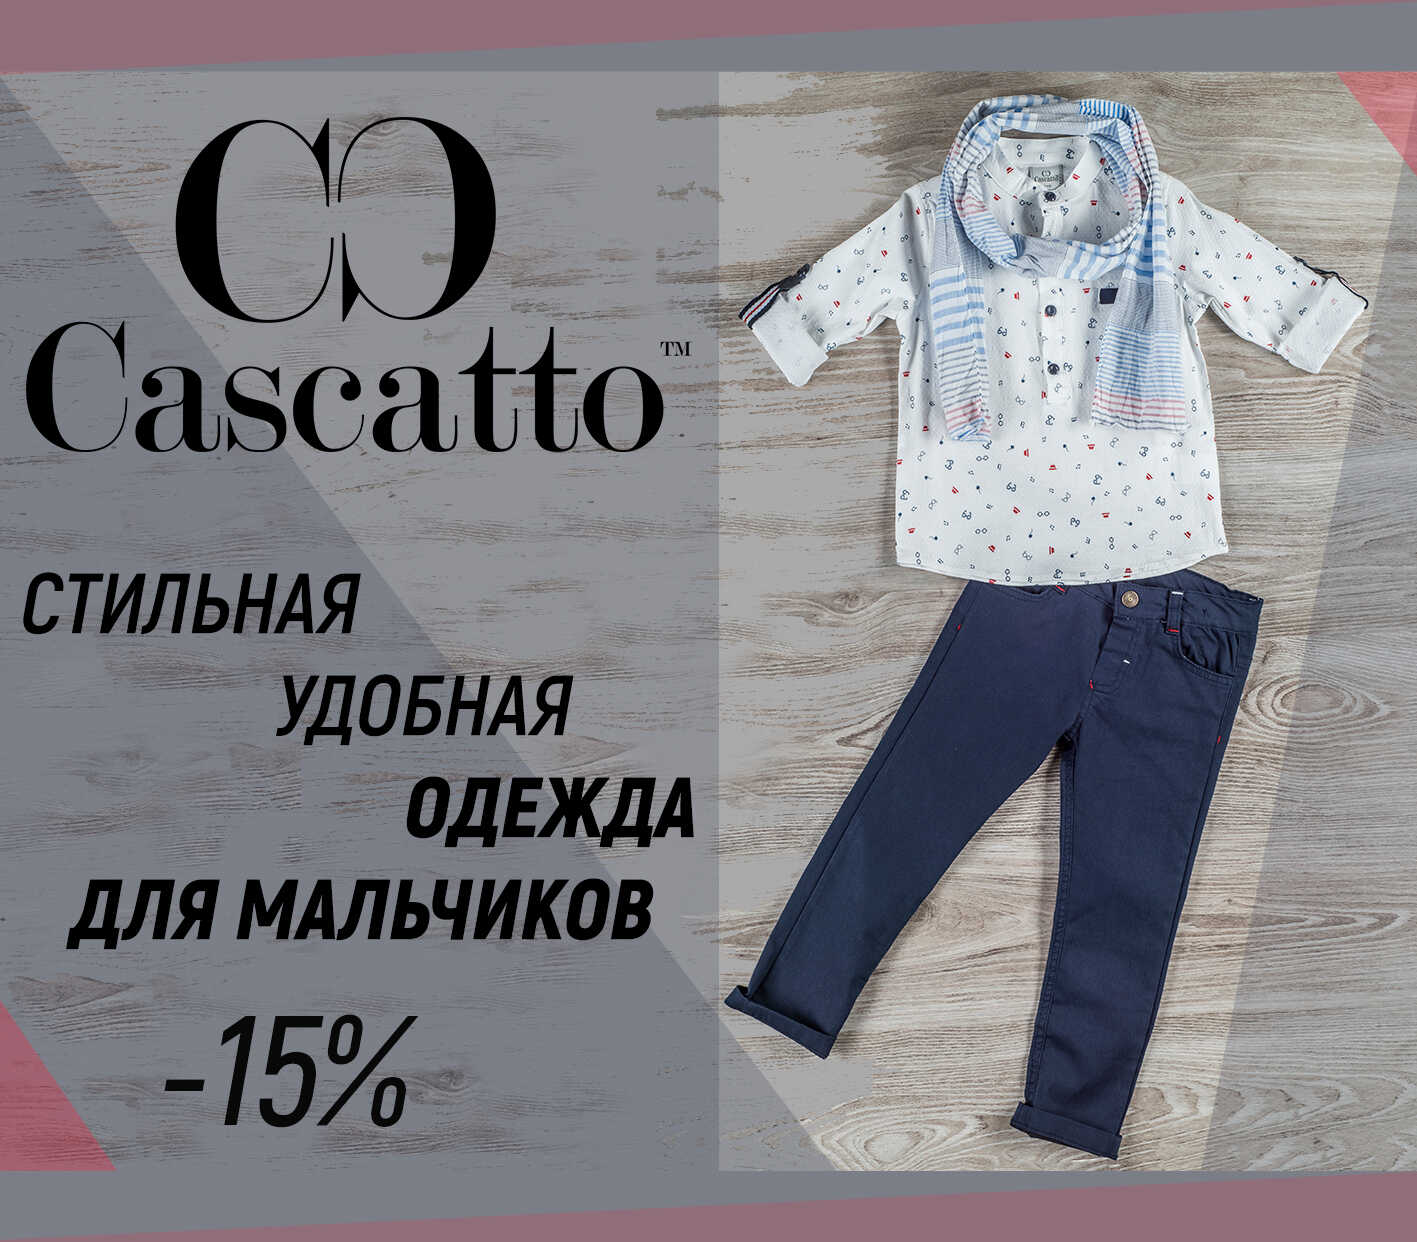 Распродажа Cascatto.ru